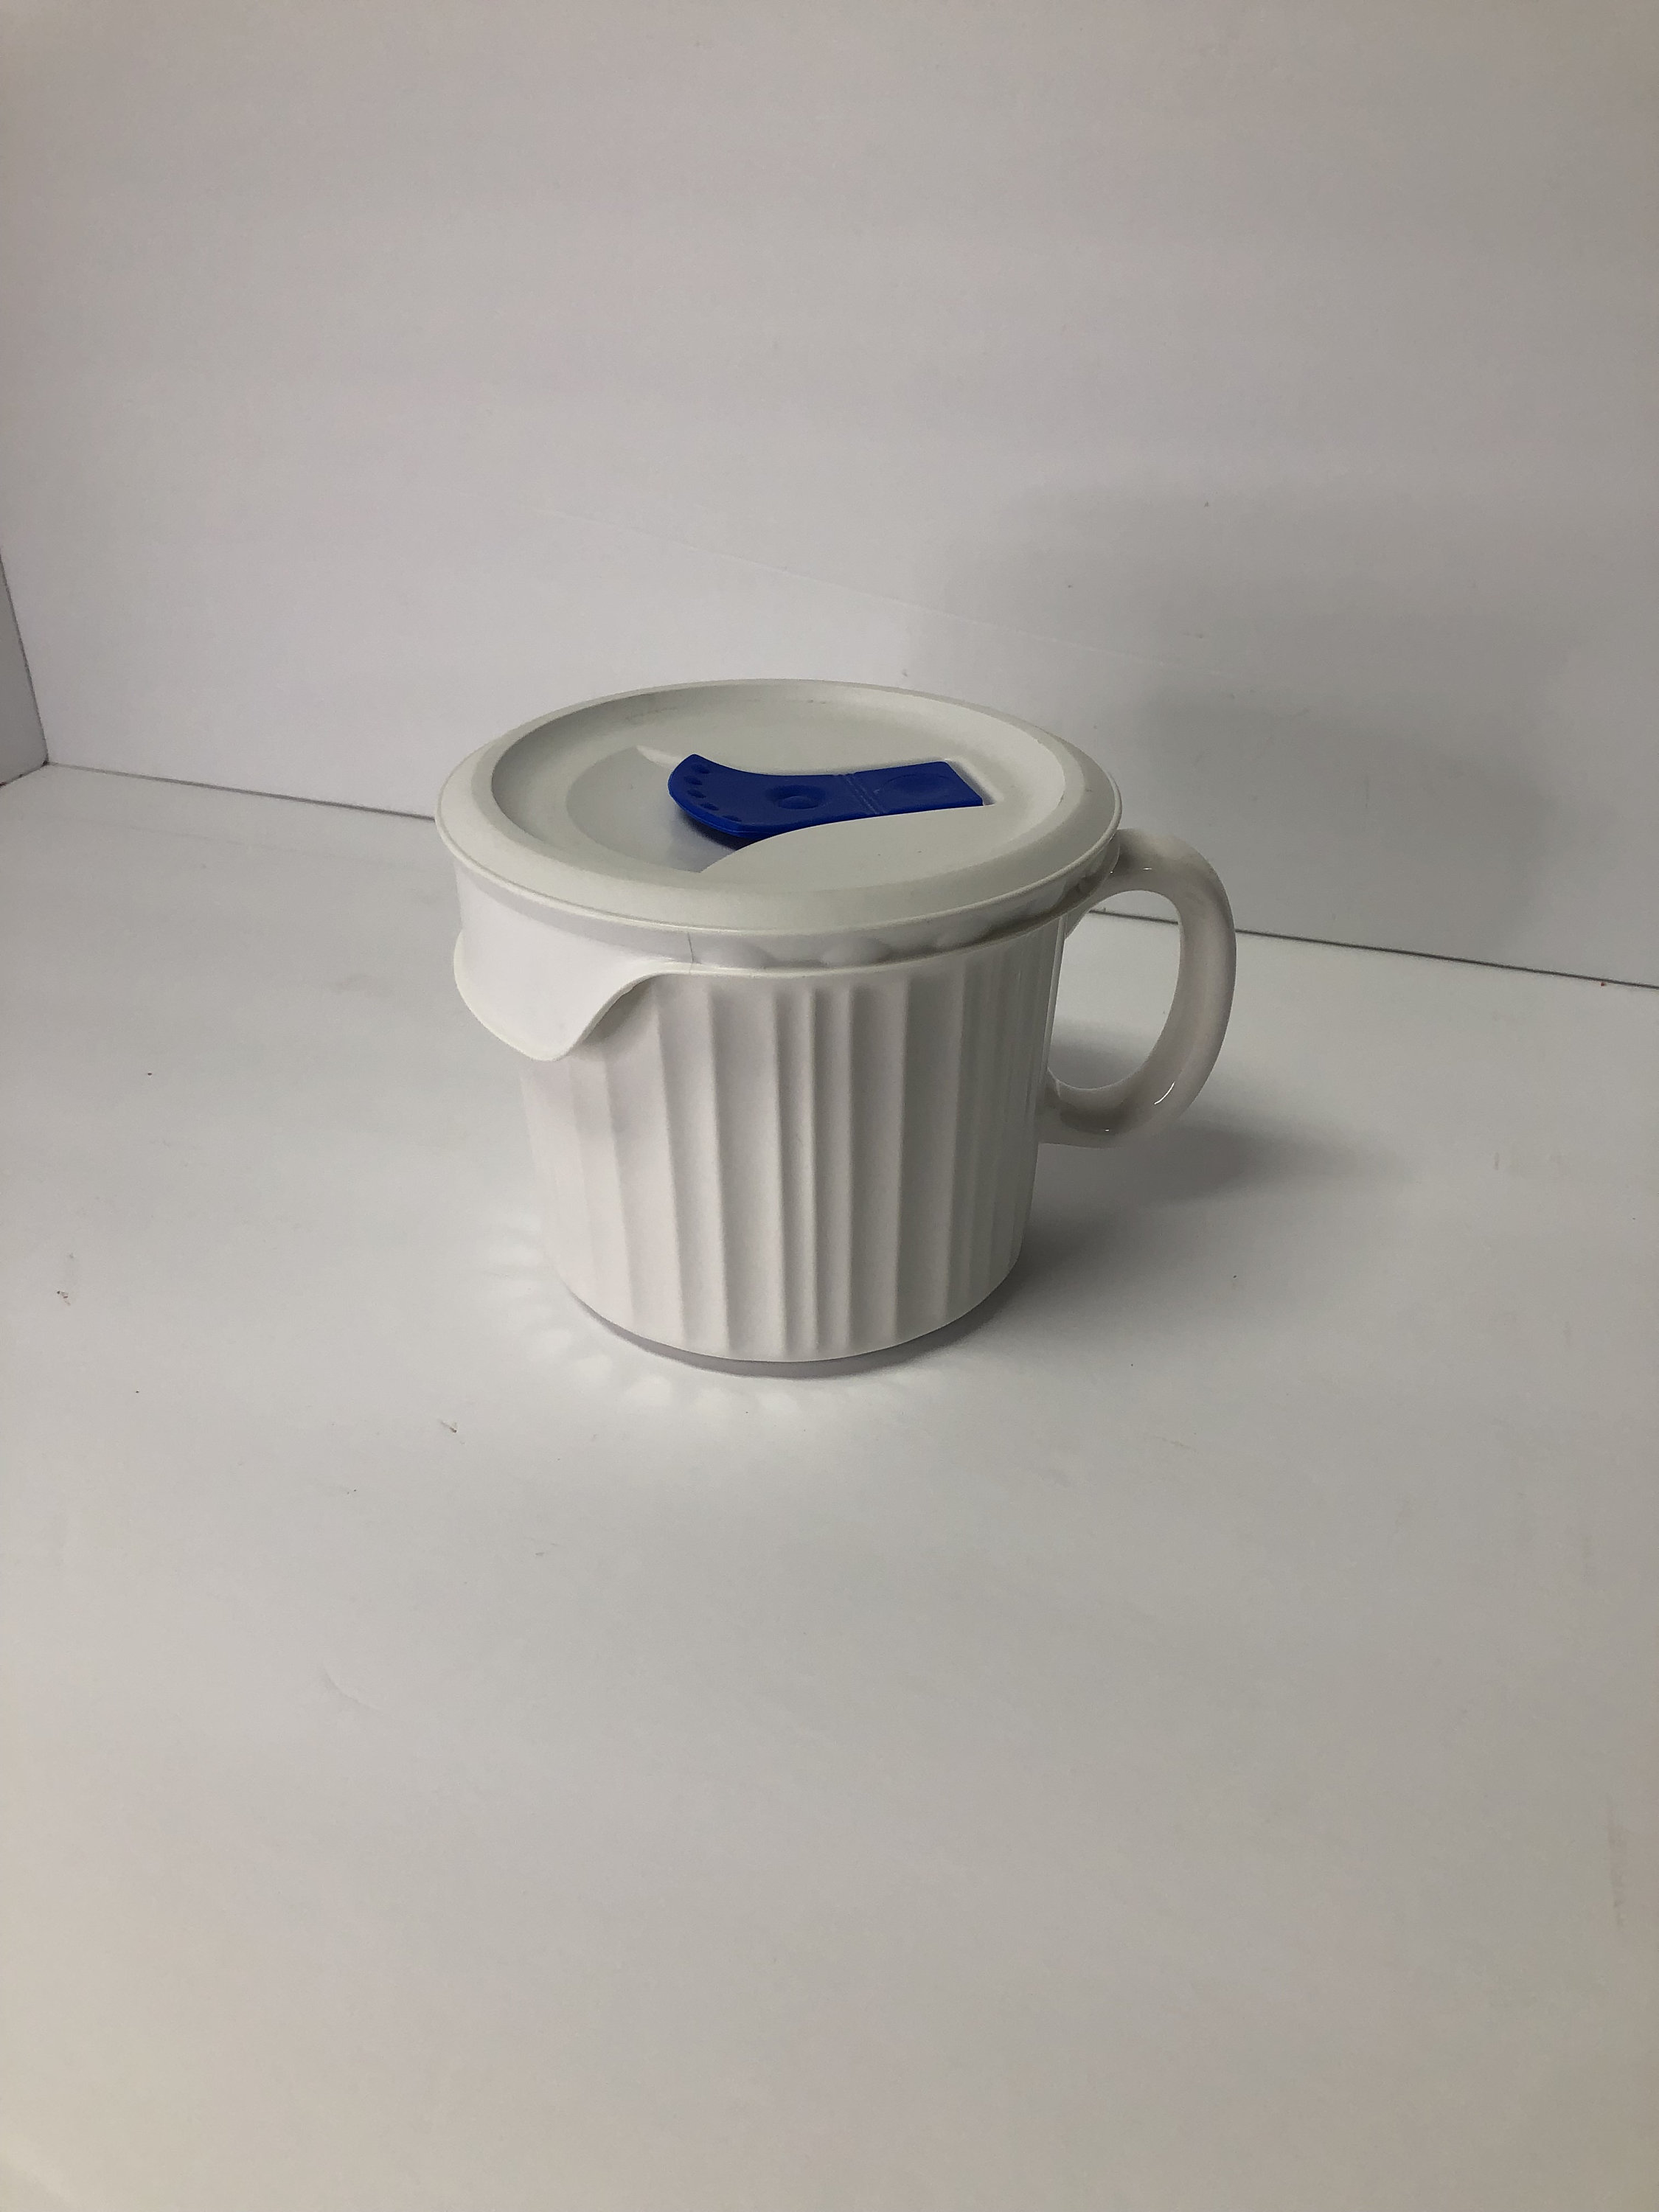 Tupperware Crystalwave Microwave Safe Hot Soup Mug or Cold Ice New